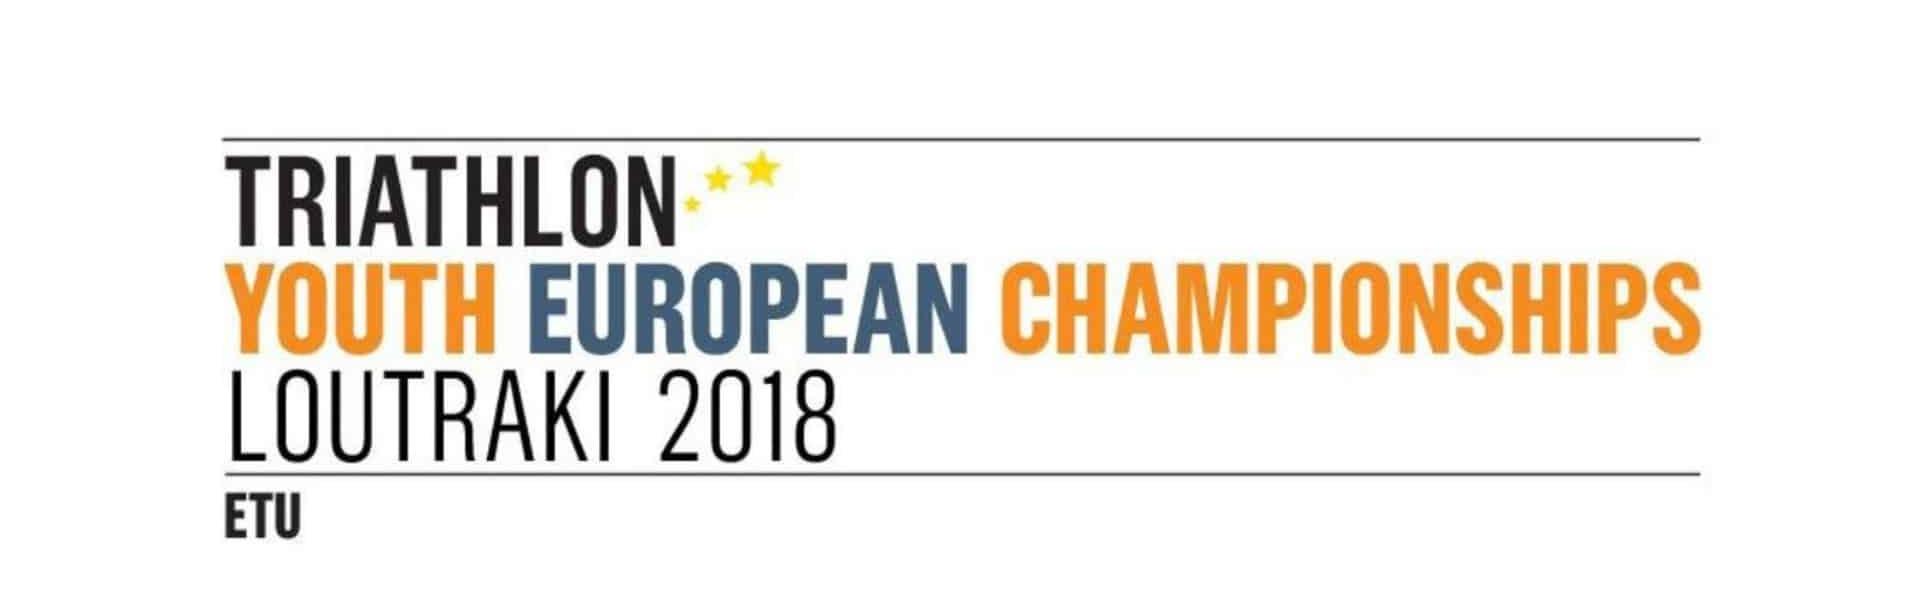 Triathlon youth European Championship